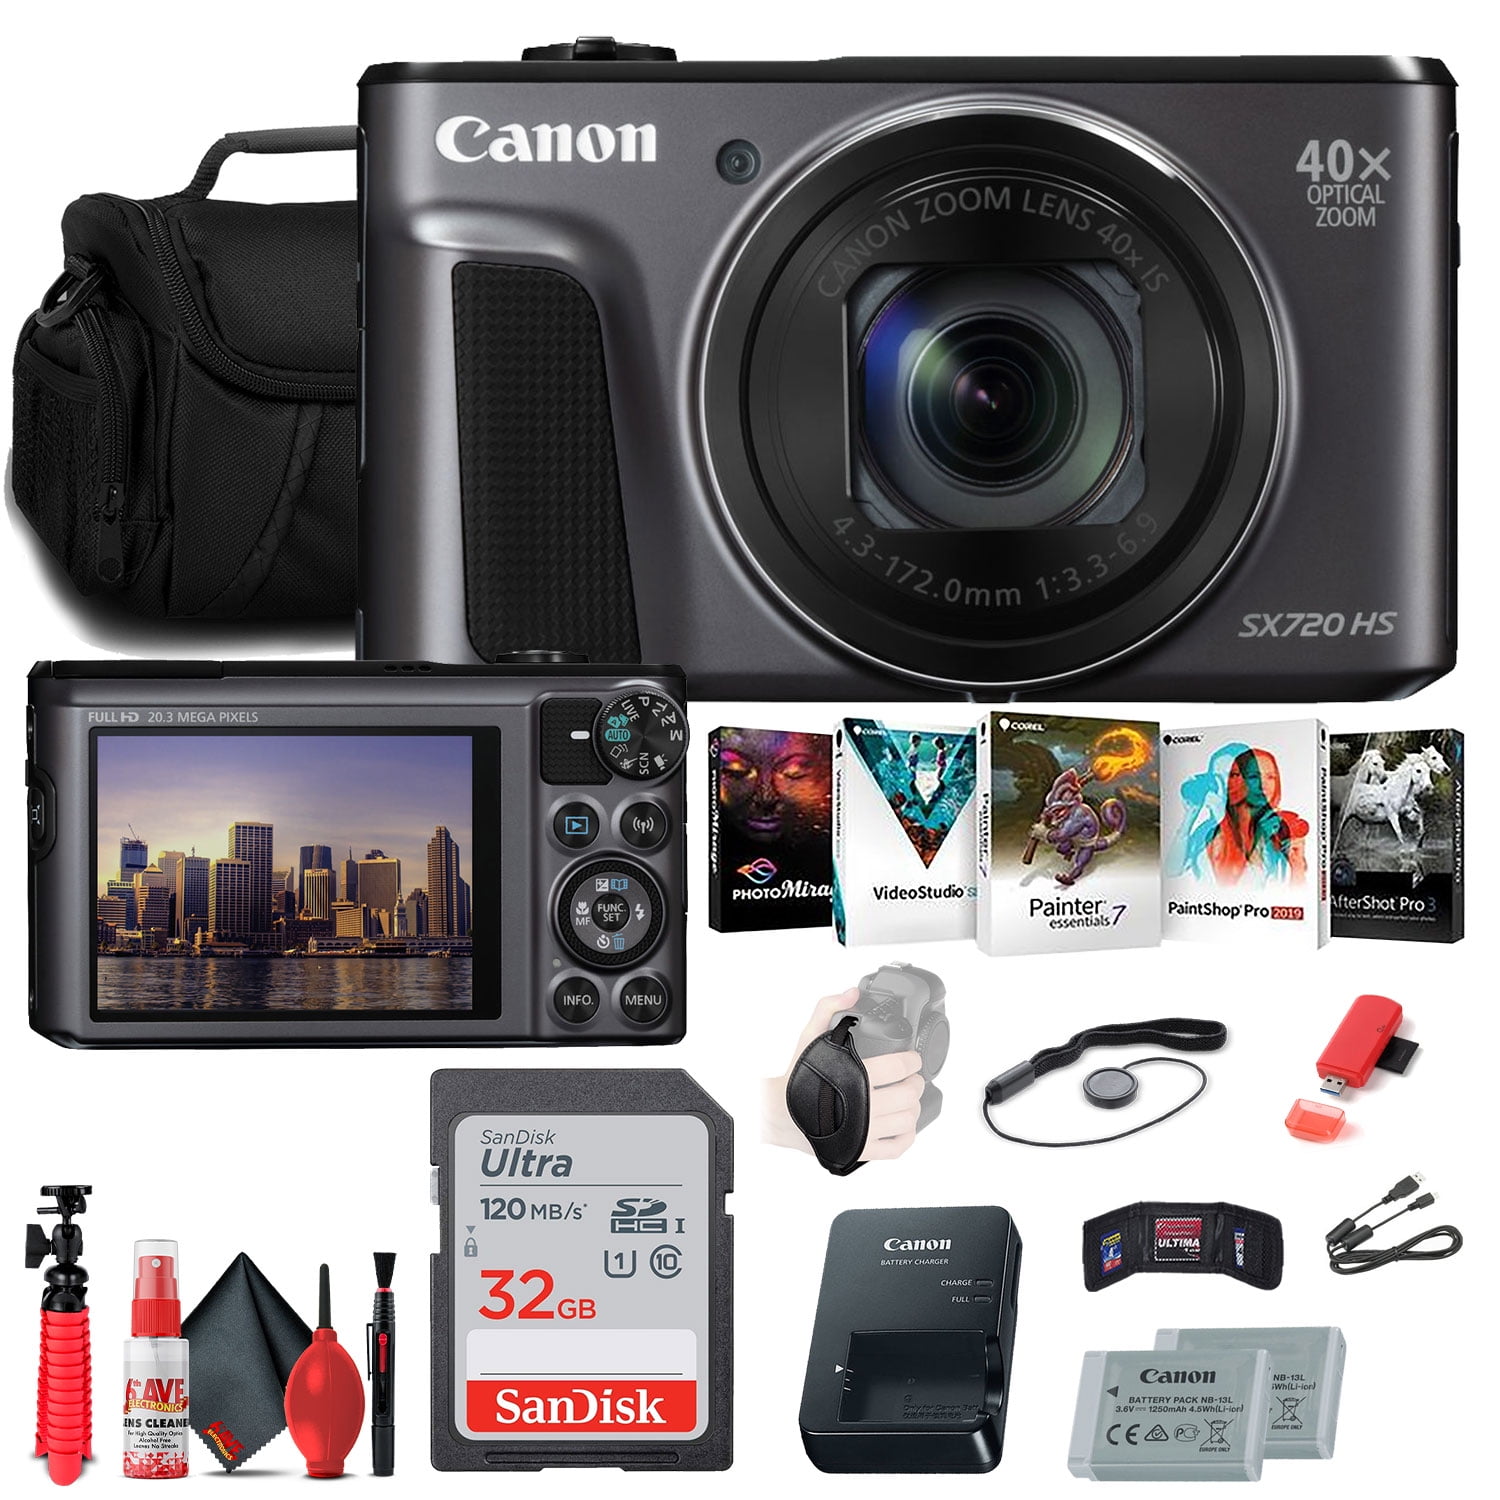 Canon PowerShot SX720 HS Digital Camera (1070C001) + 32GB Card +